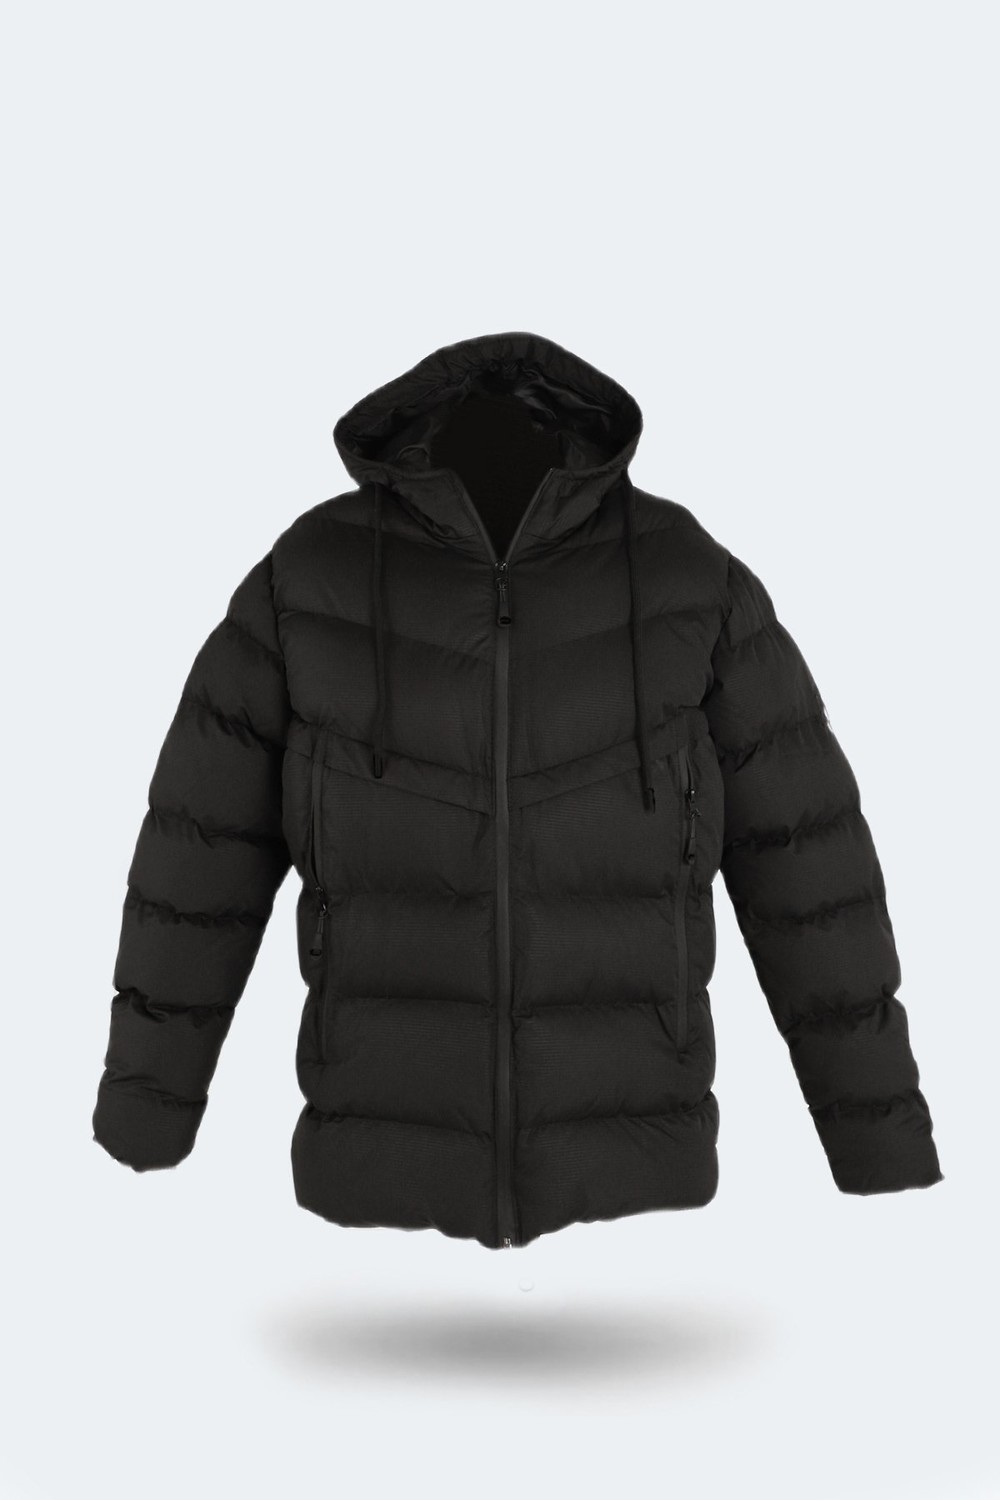 Slazenger HAIFA Men's Plus Size Coat Black